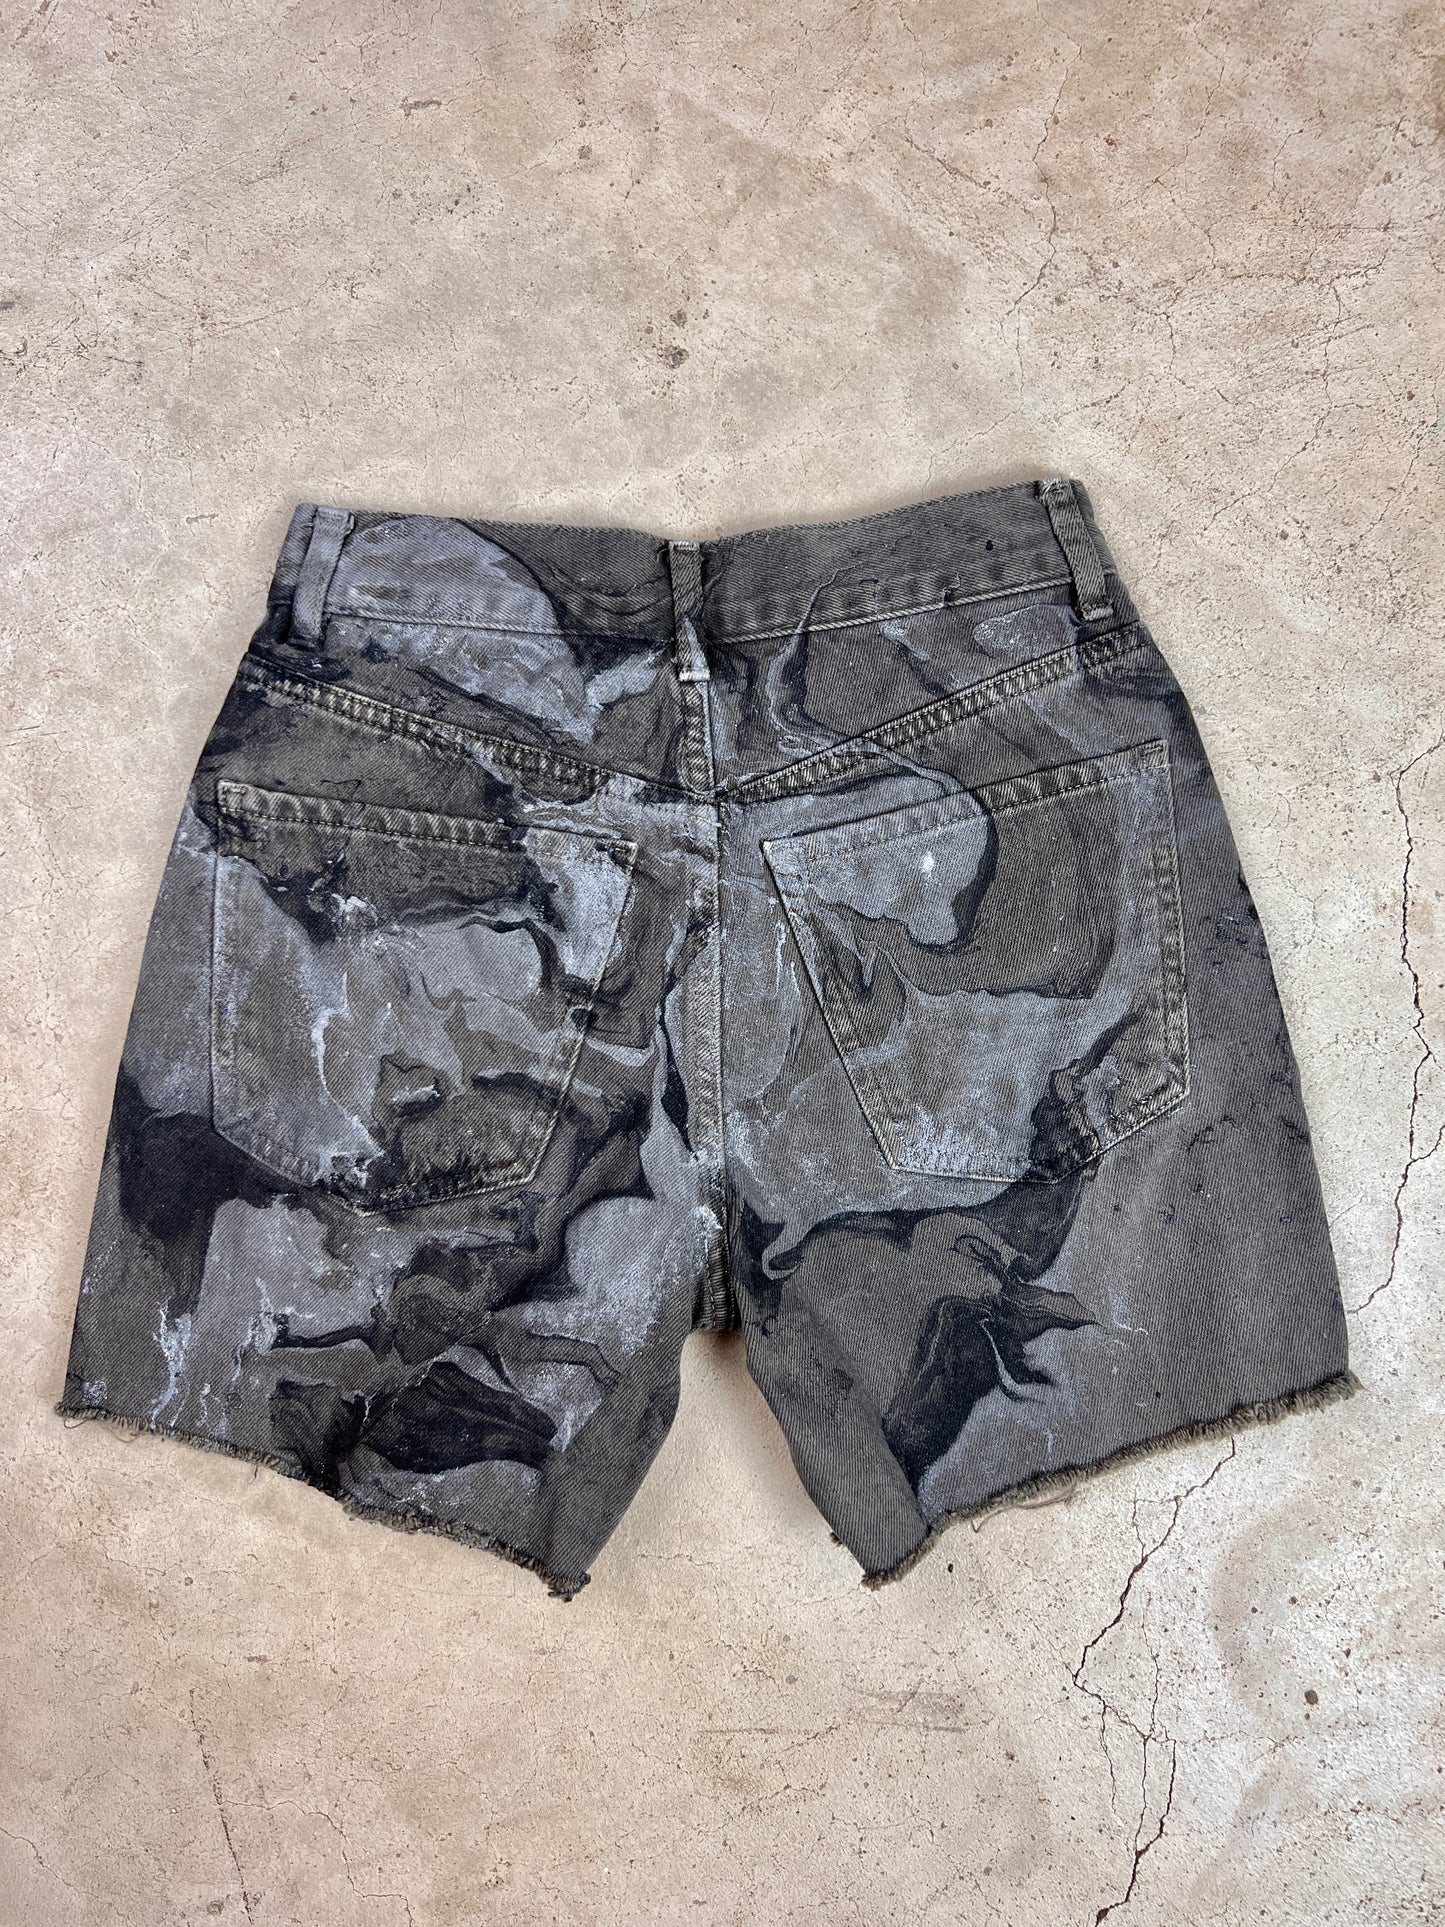 The Marbled Black Denim Shorts - 24"